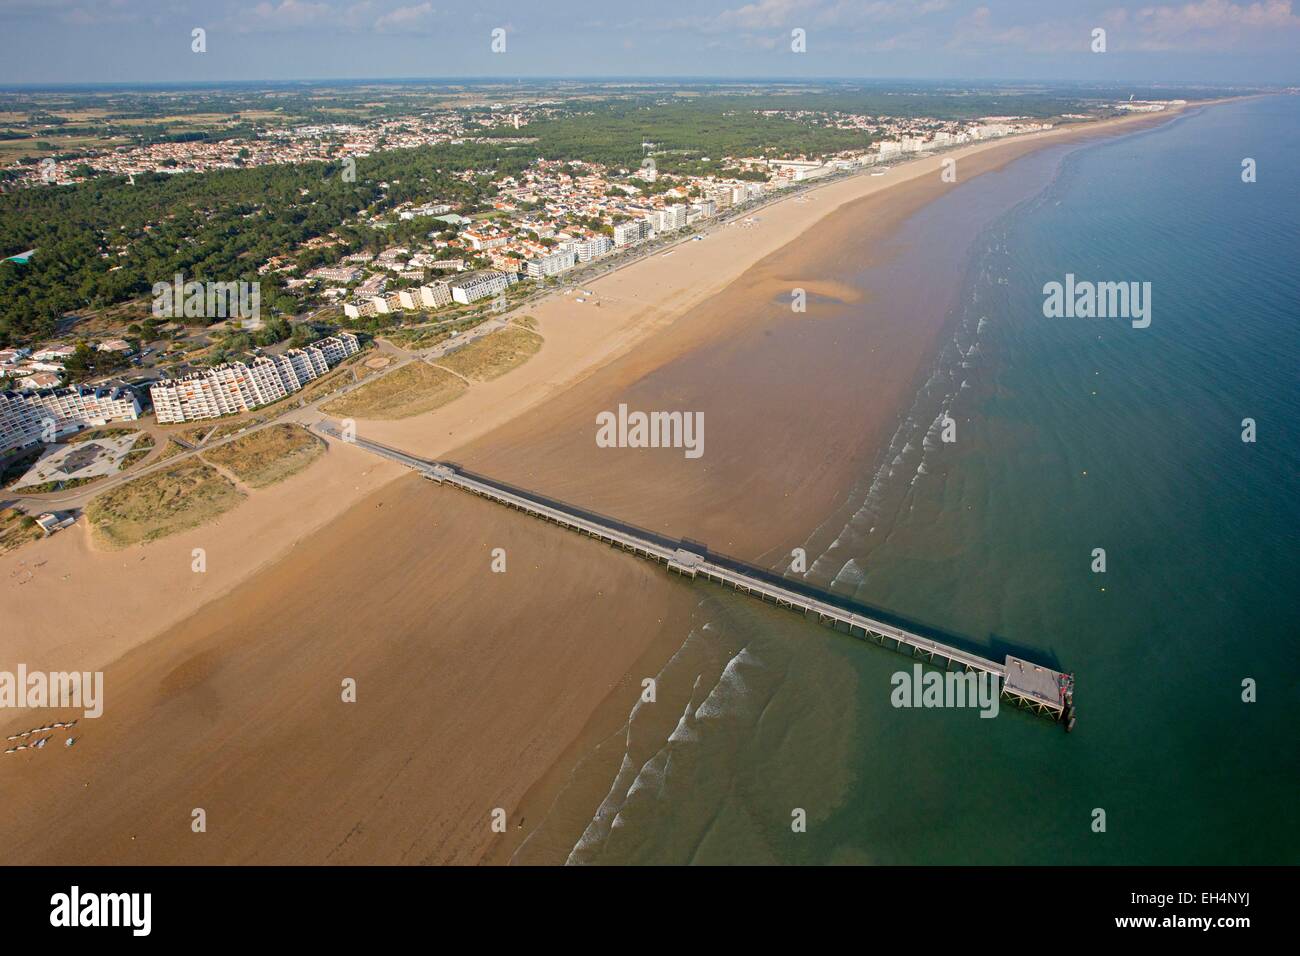 Saint jean de monts aerial view hi-res stock photography and images - Alamy